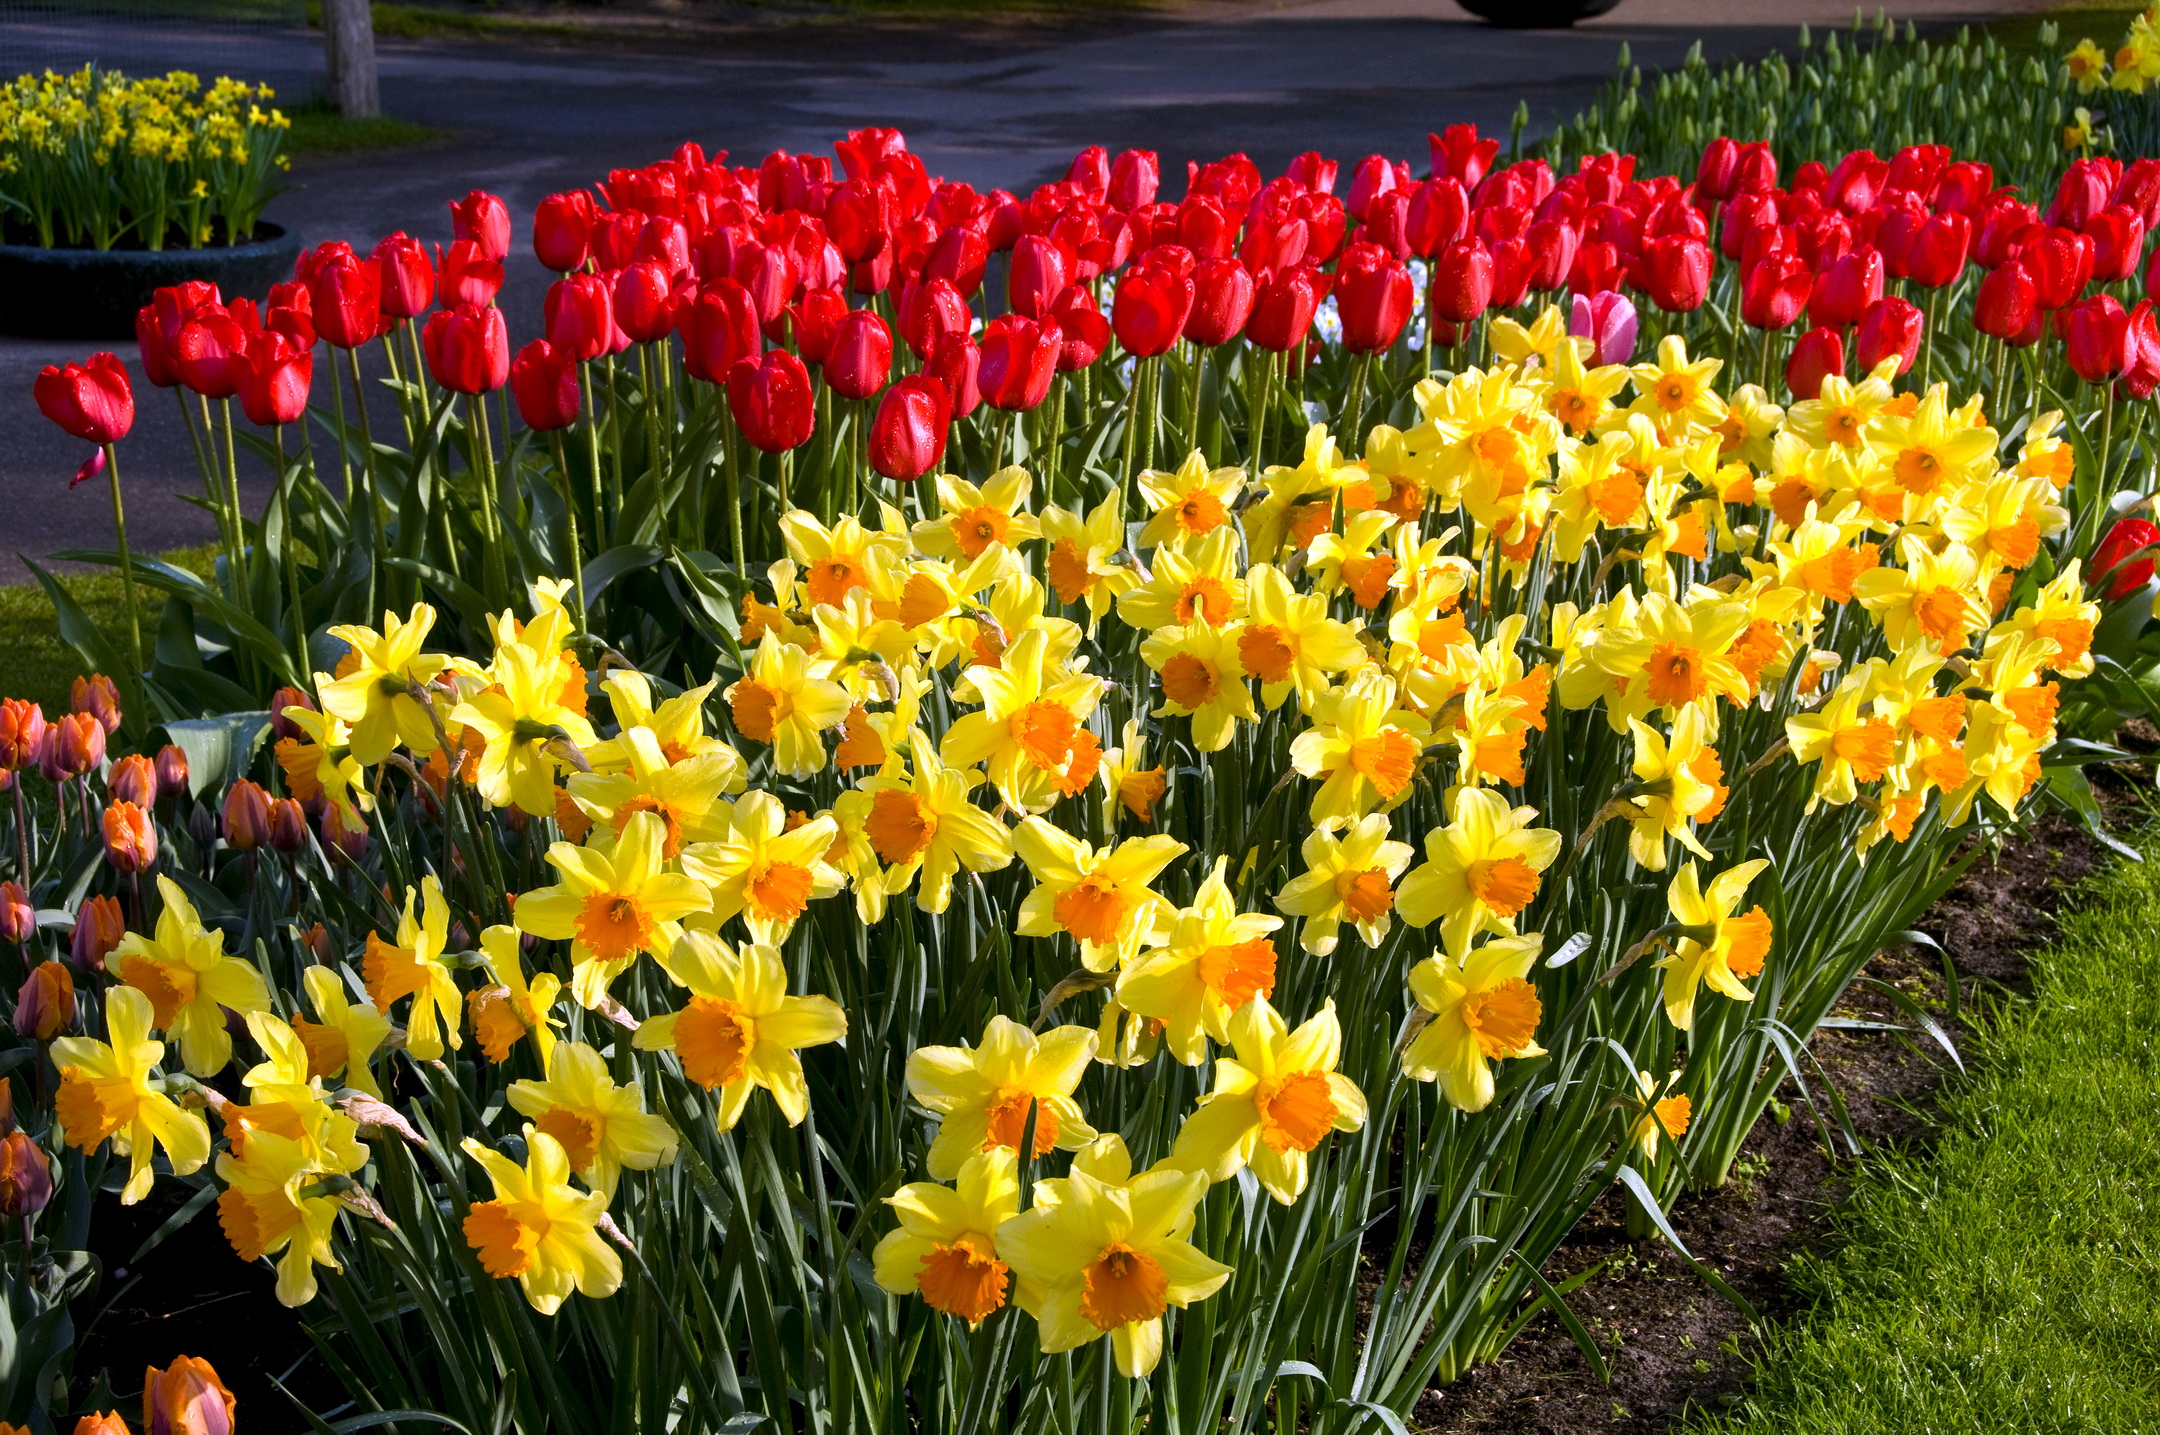 258504 descargar imagen tierra/naturaleza, flor, narciso, tulipán, flores: fondos de pantalla y protectores de pantalla gratis